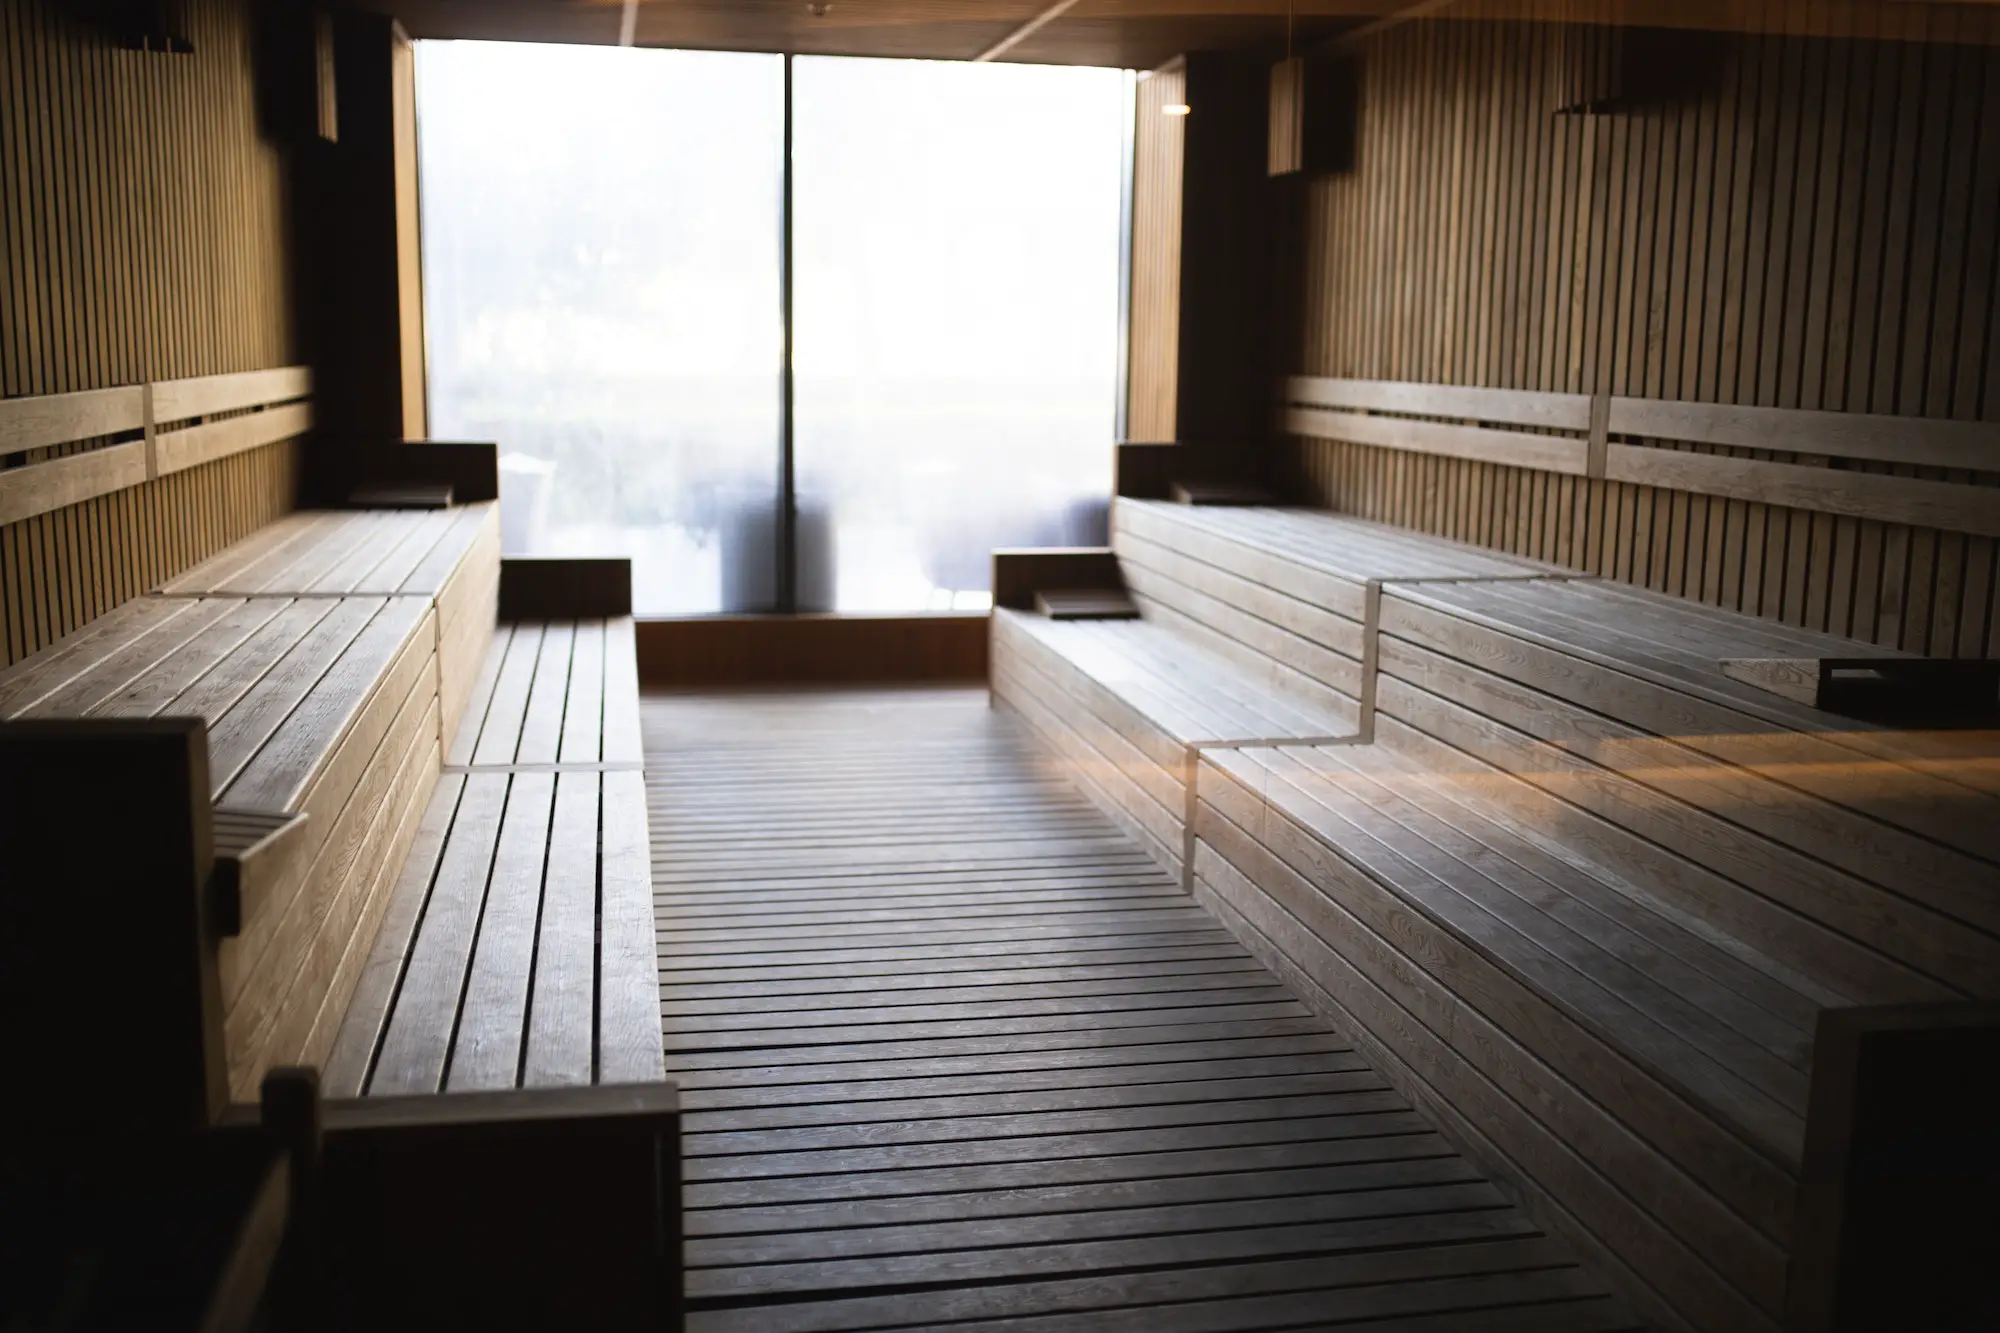 Sauna room. Finnish sauna. Roman sauna. Steam room.